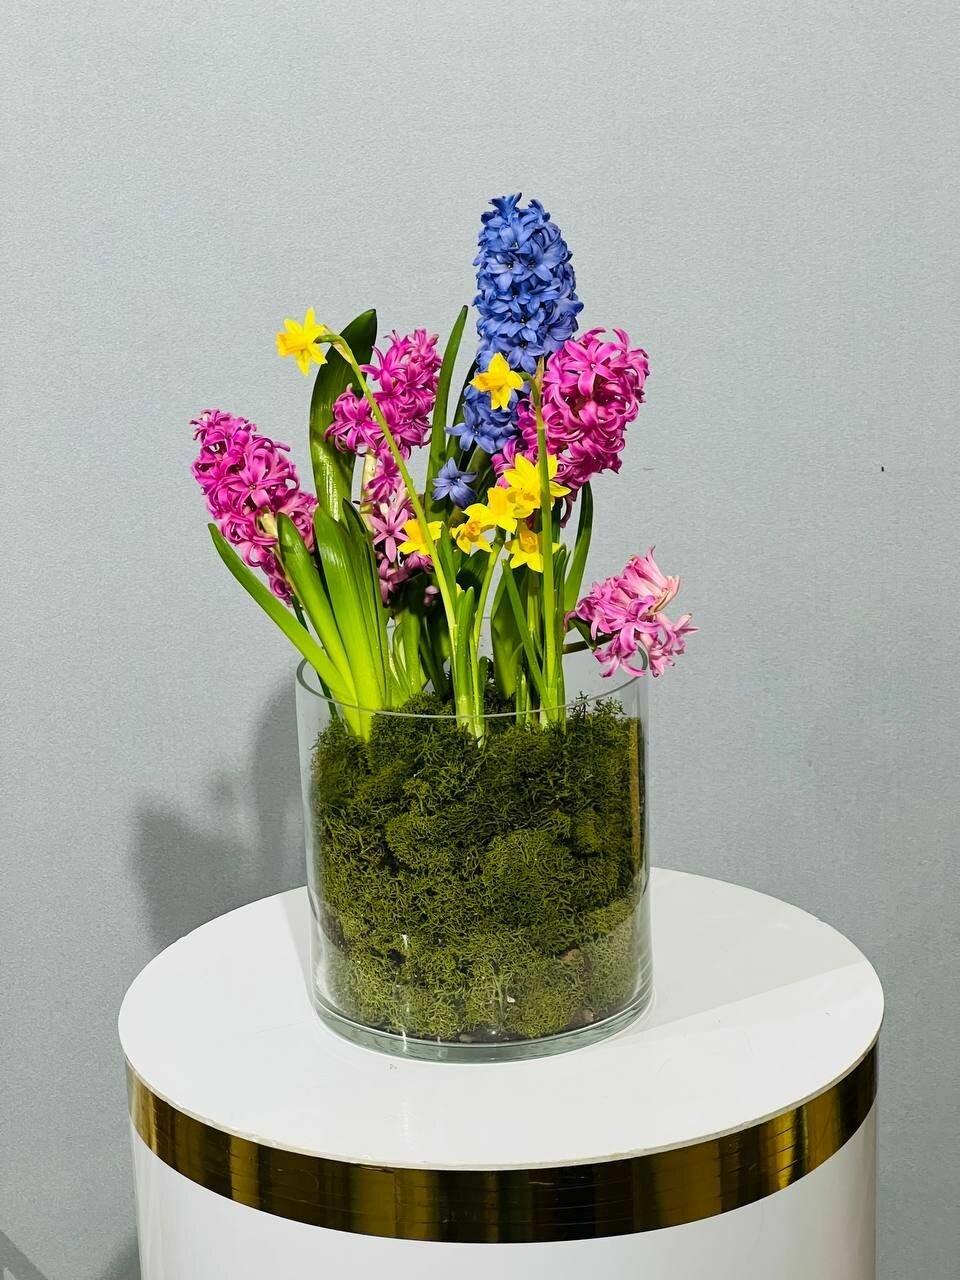 Весенние первоцветы / Нарцисс и гиацинт / Композиция в вазе